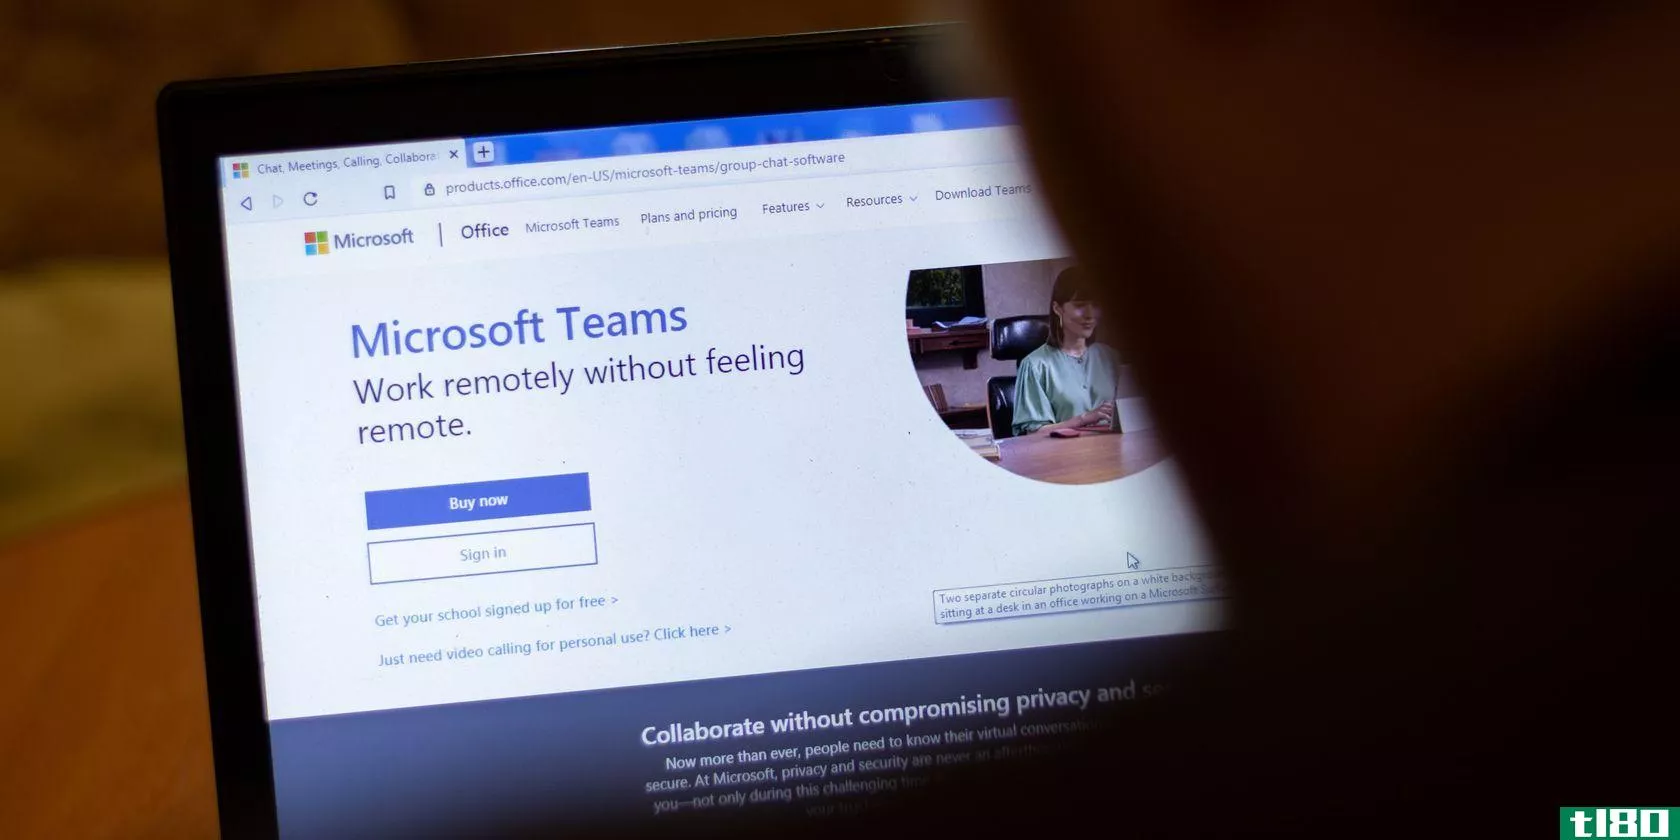 The Microsoft Teams webpage